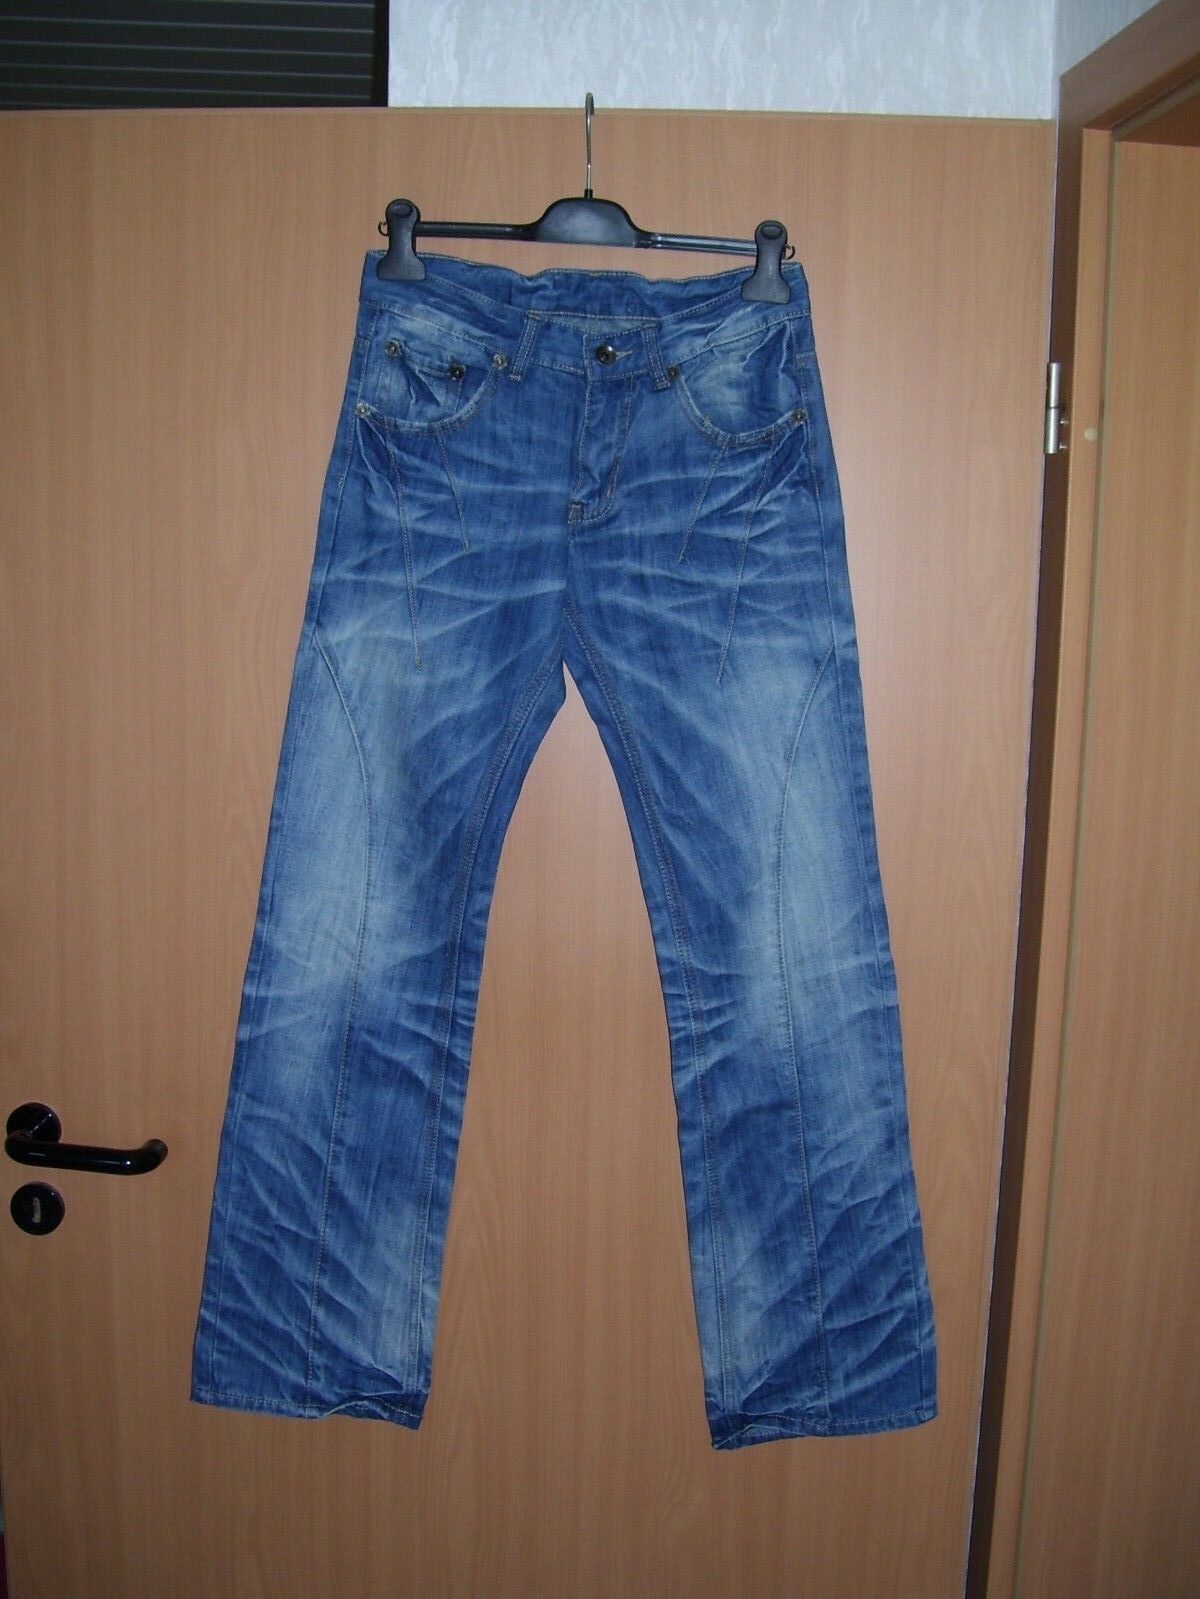 Herren Jeans blau used look Nieten Falten gerades Bein W31 W32 L34 neu